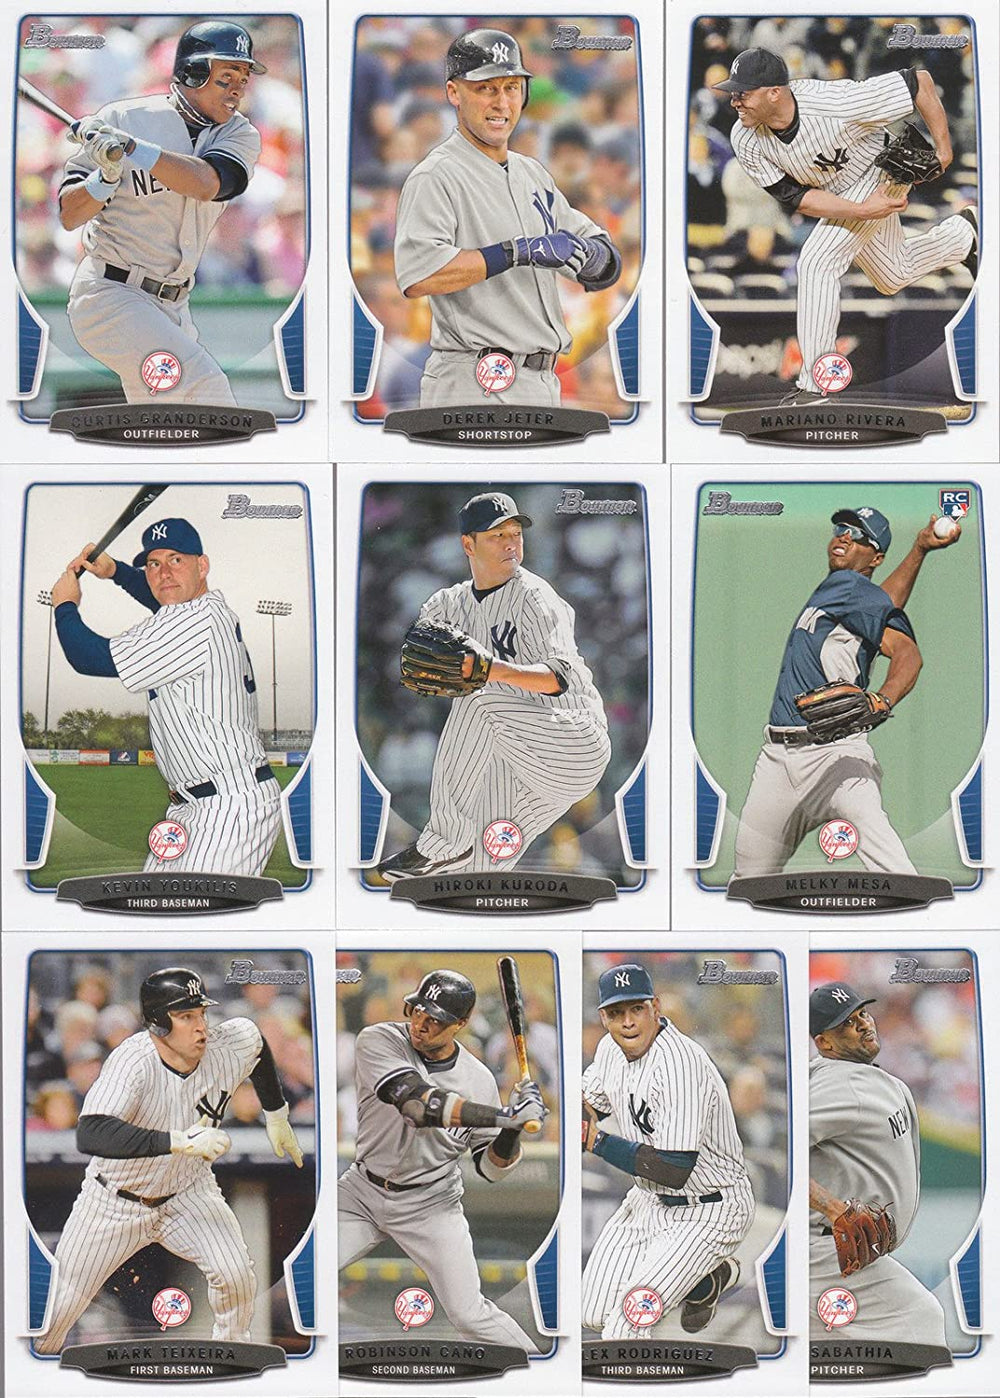 New York Yankees 2013 Bowman 10 Card Team Set with Derek Jeter, Mariano Rivera, Robinson Cano+